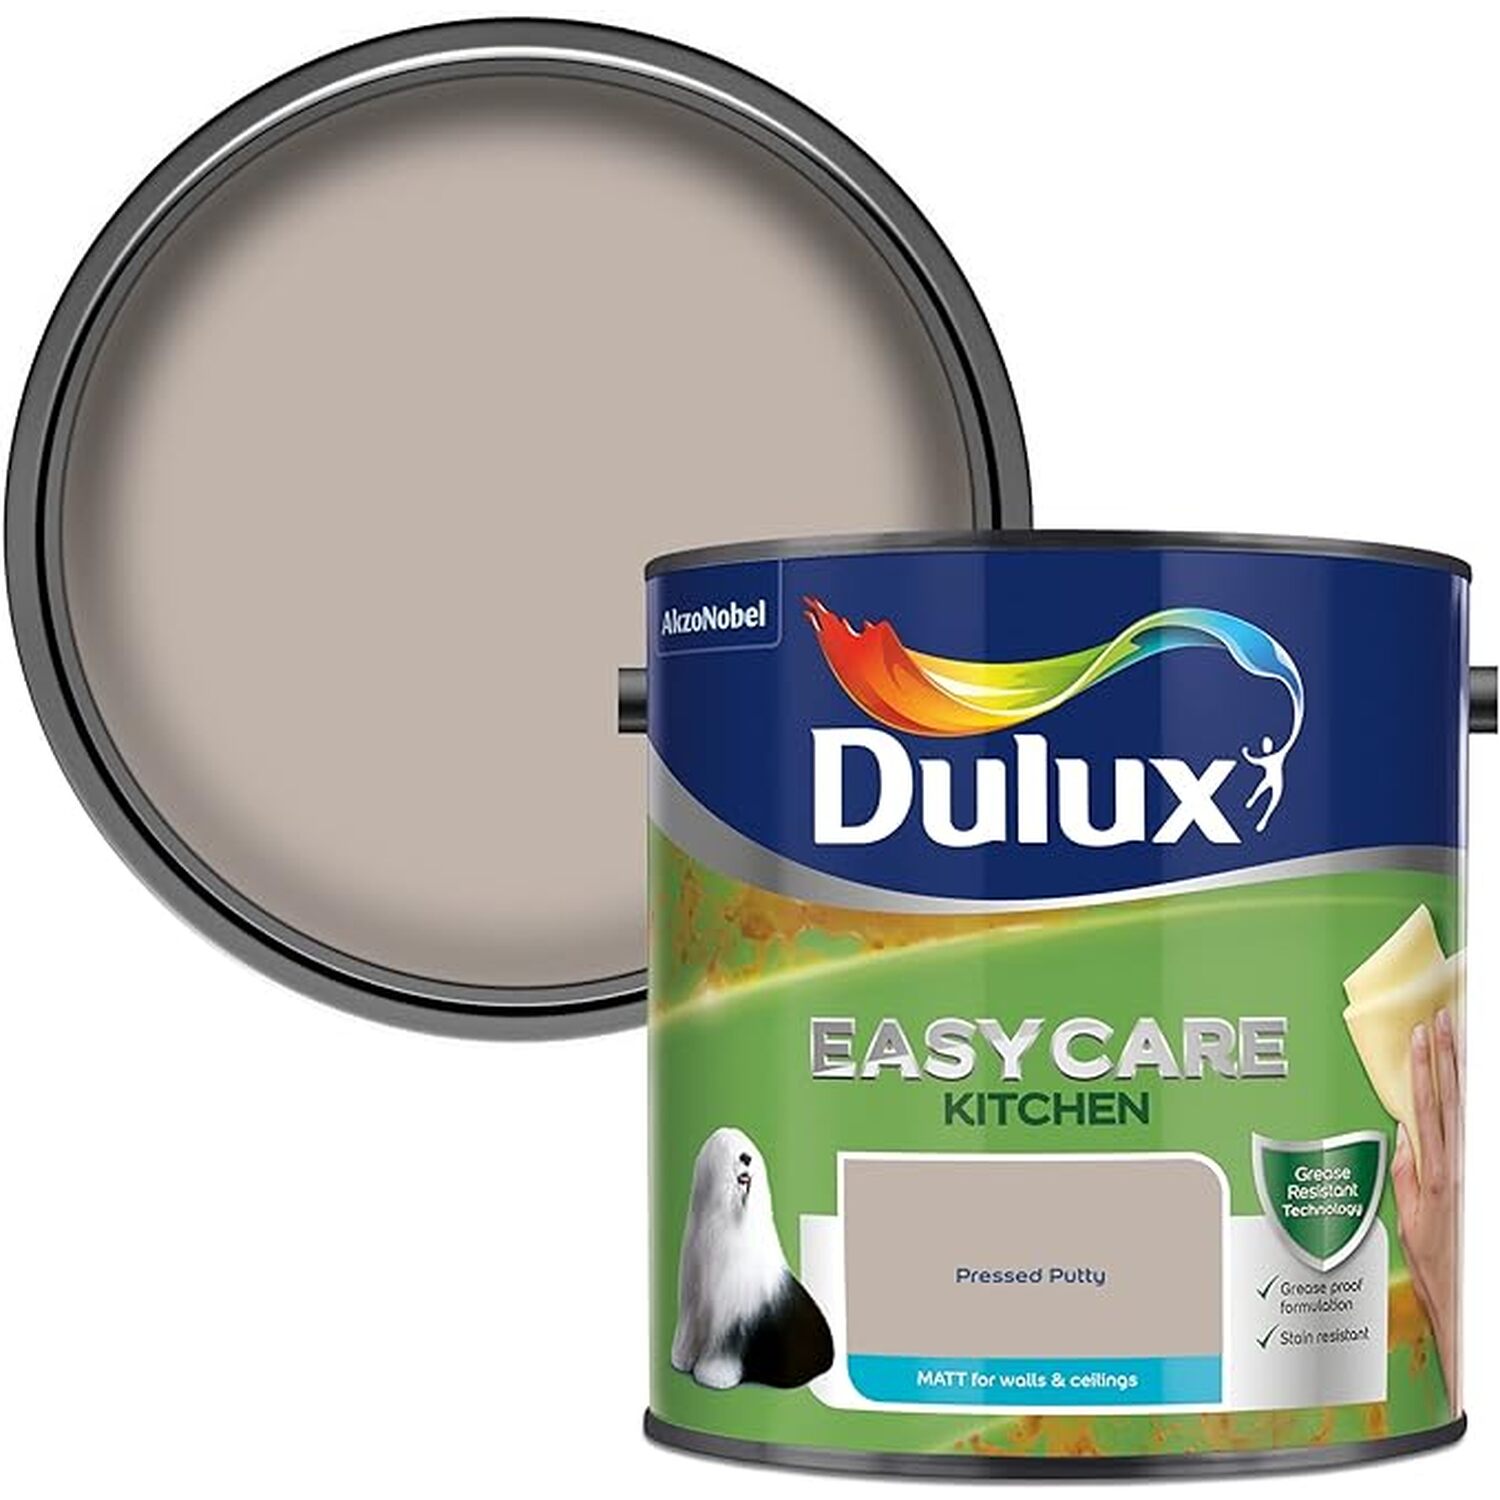 Dulux Easycare Kitchen Pressed Putty Matt Emulsion Paint 2.5L Image 1